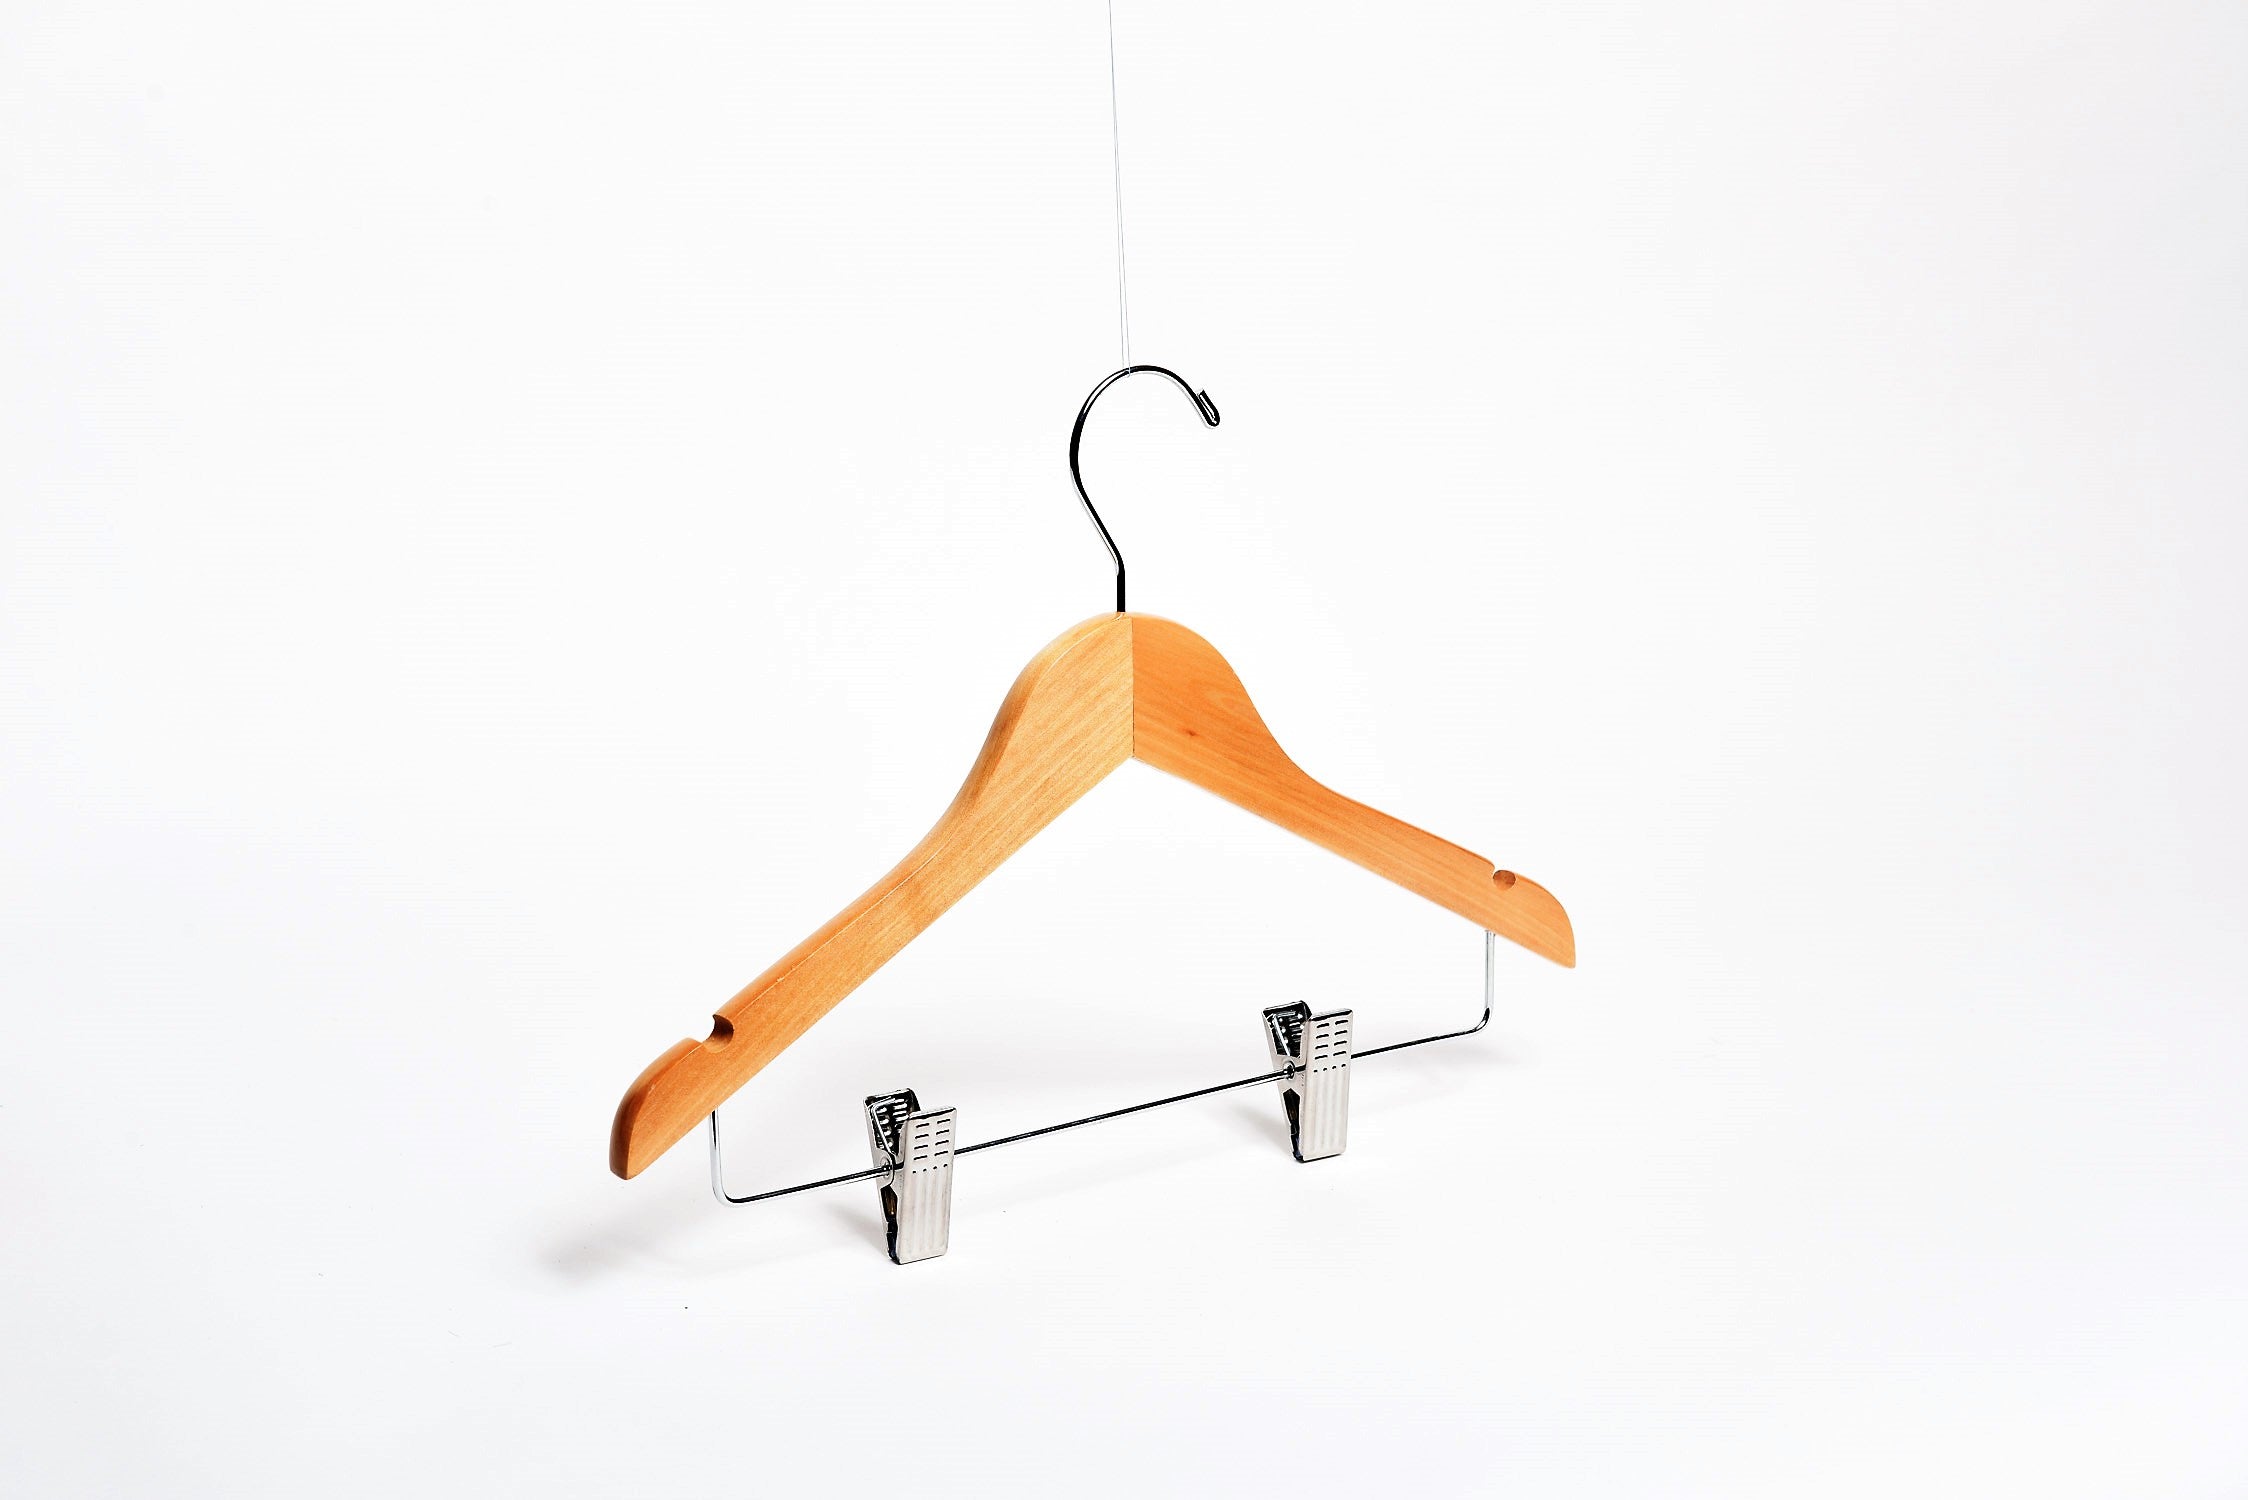 12 Children’s Wooden Top Hanger with Chrome Hook